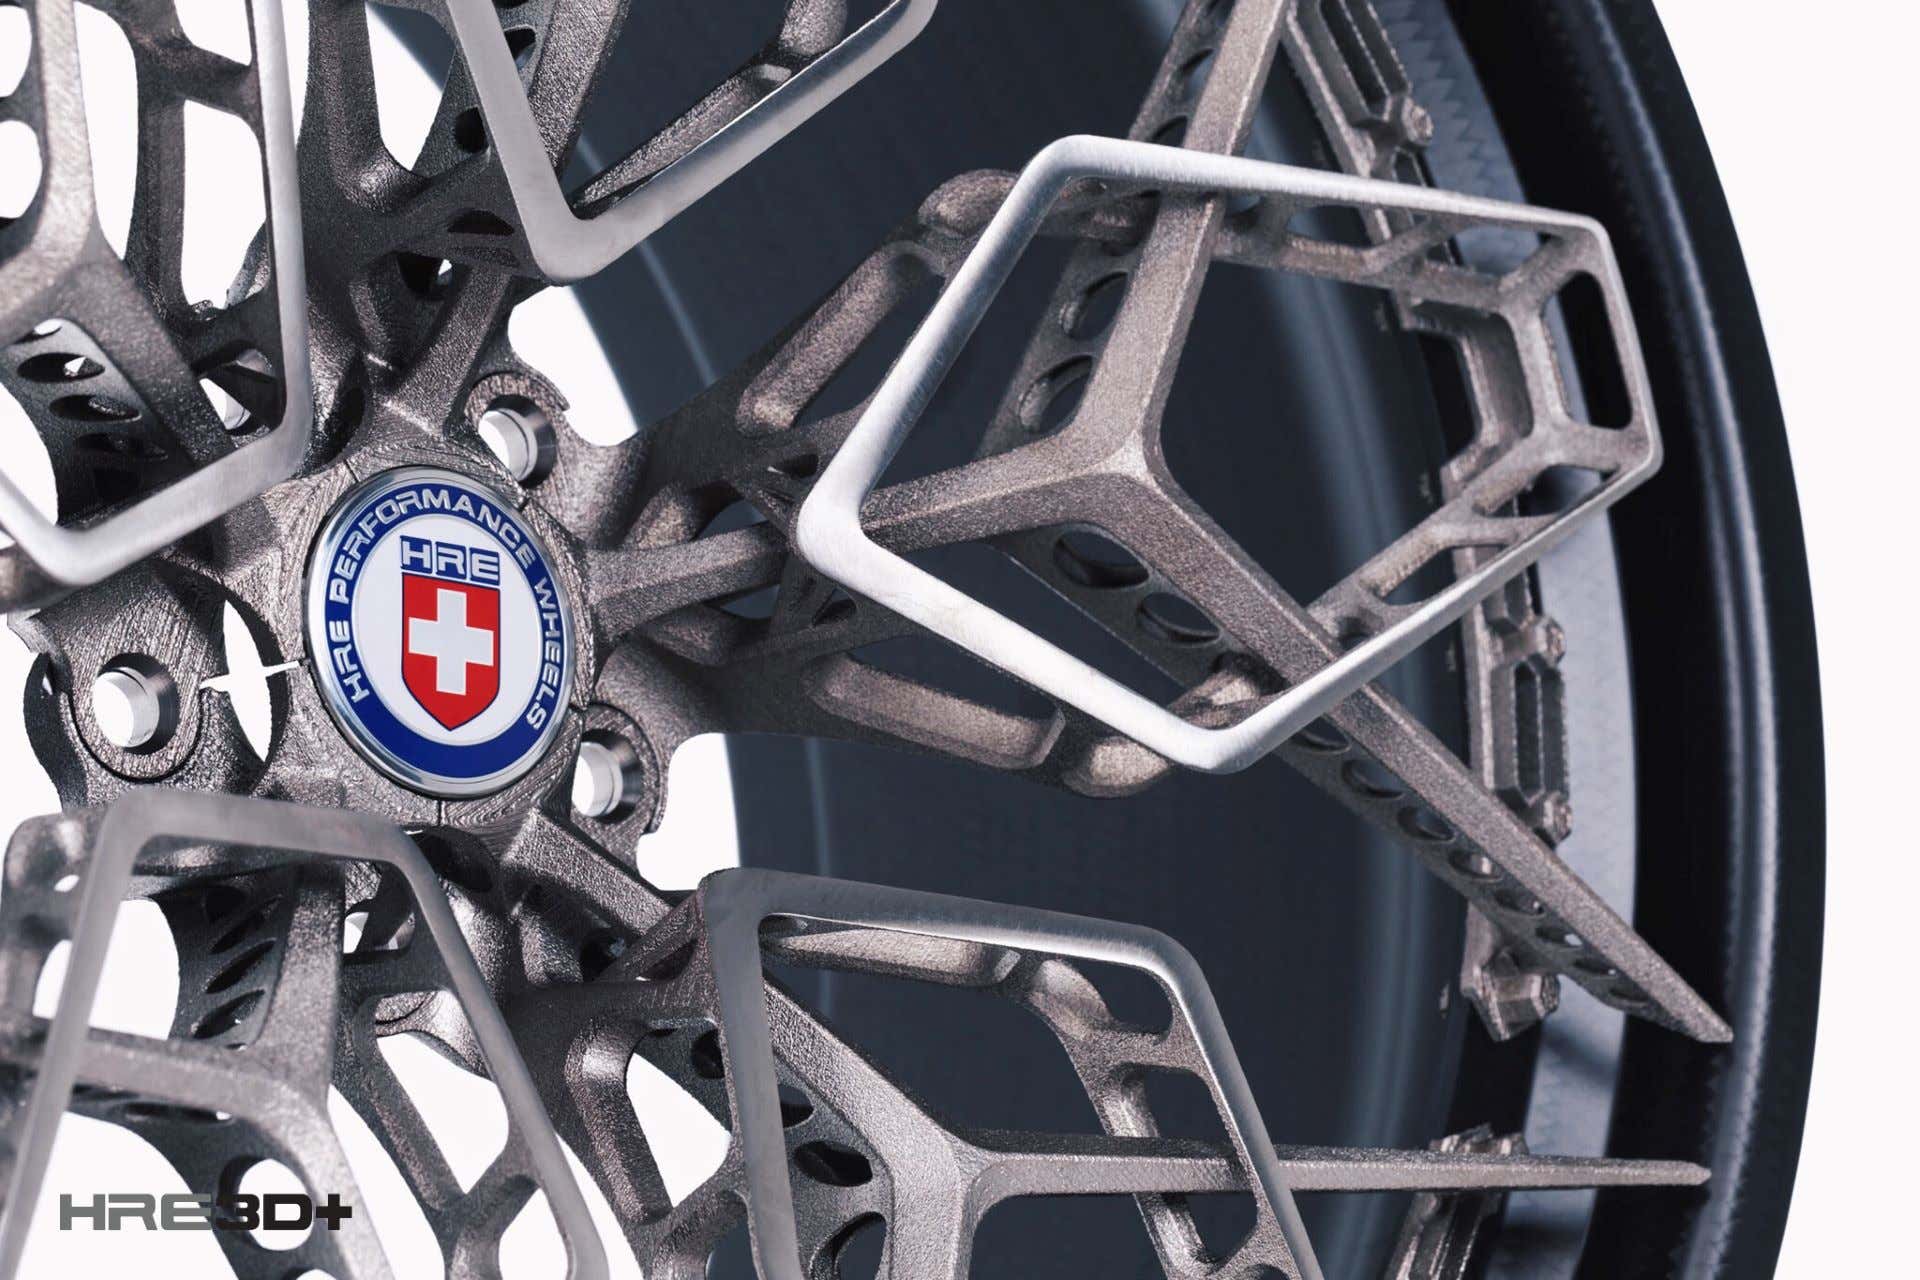 A closer look at HRE's intricate titanium wheel design.